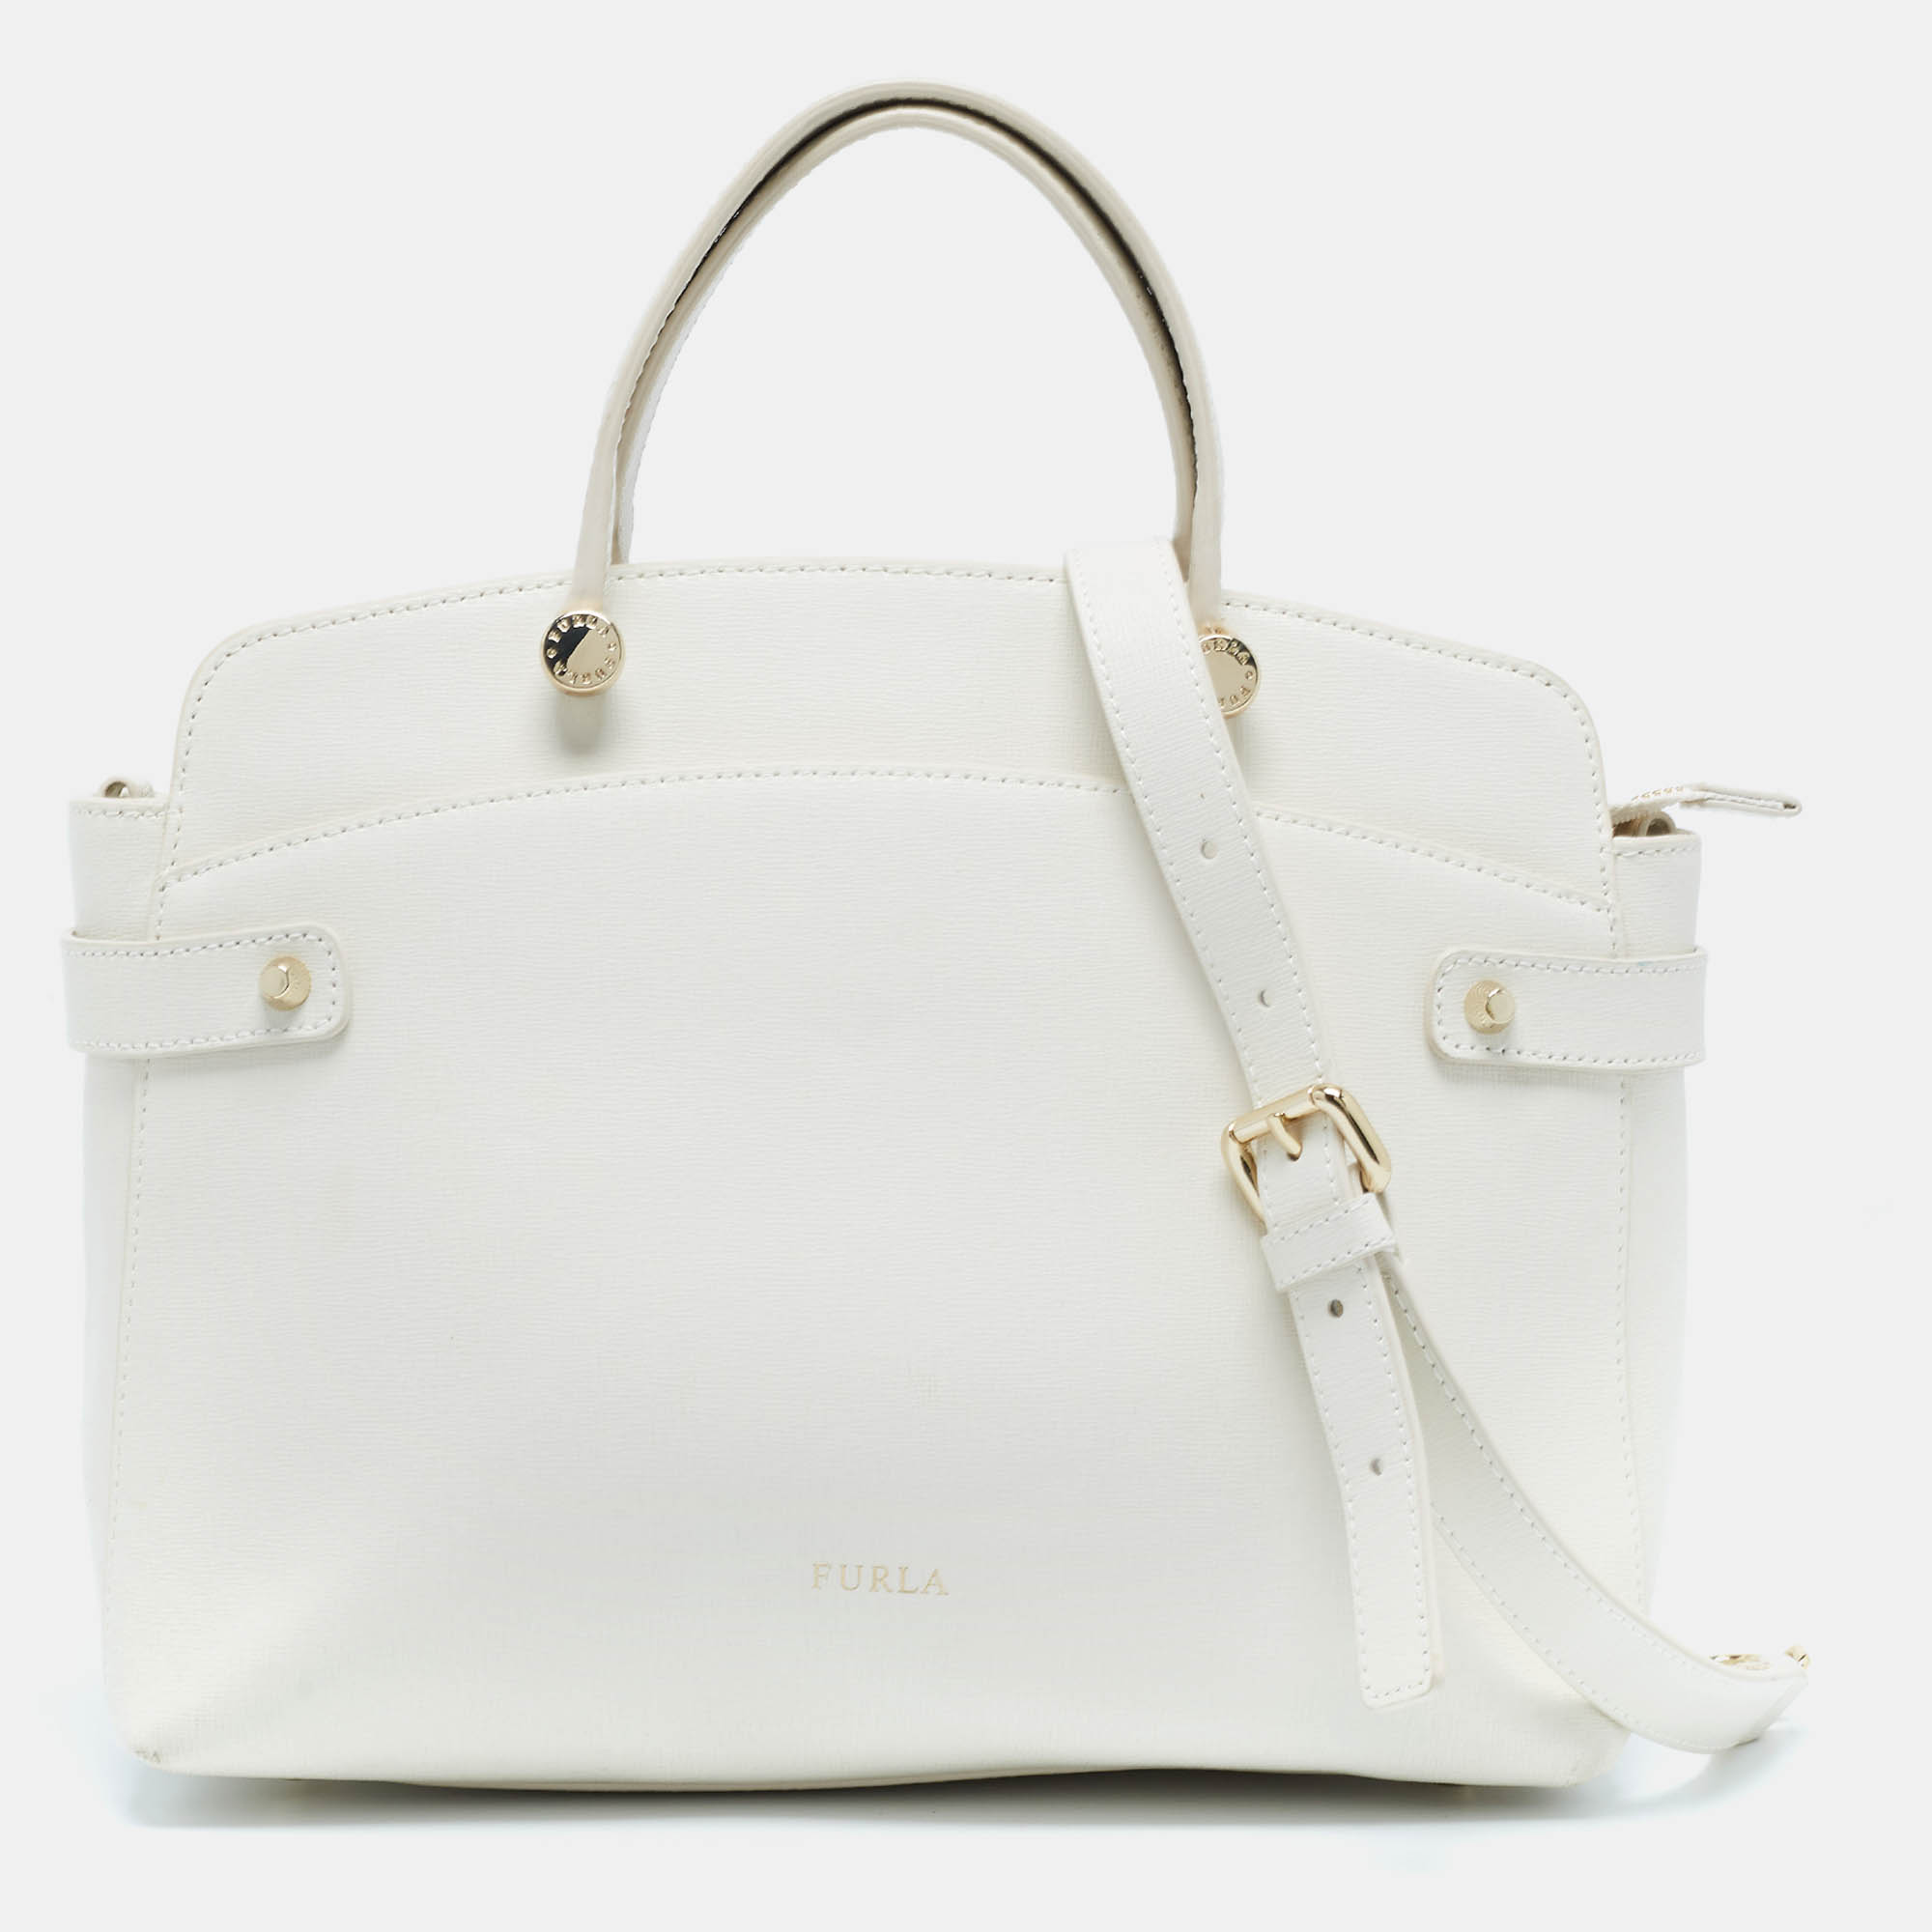 Furla white leather medium agata satchel